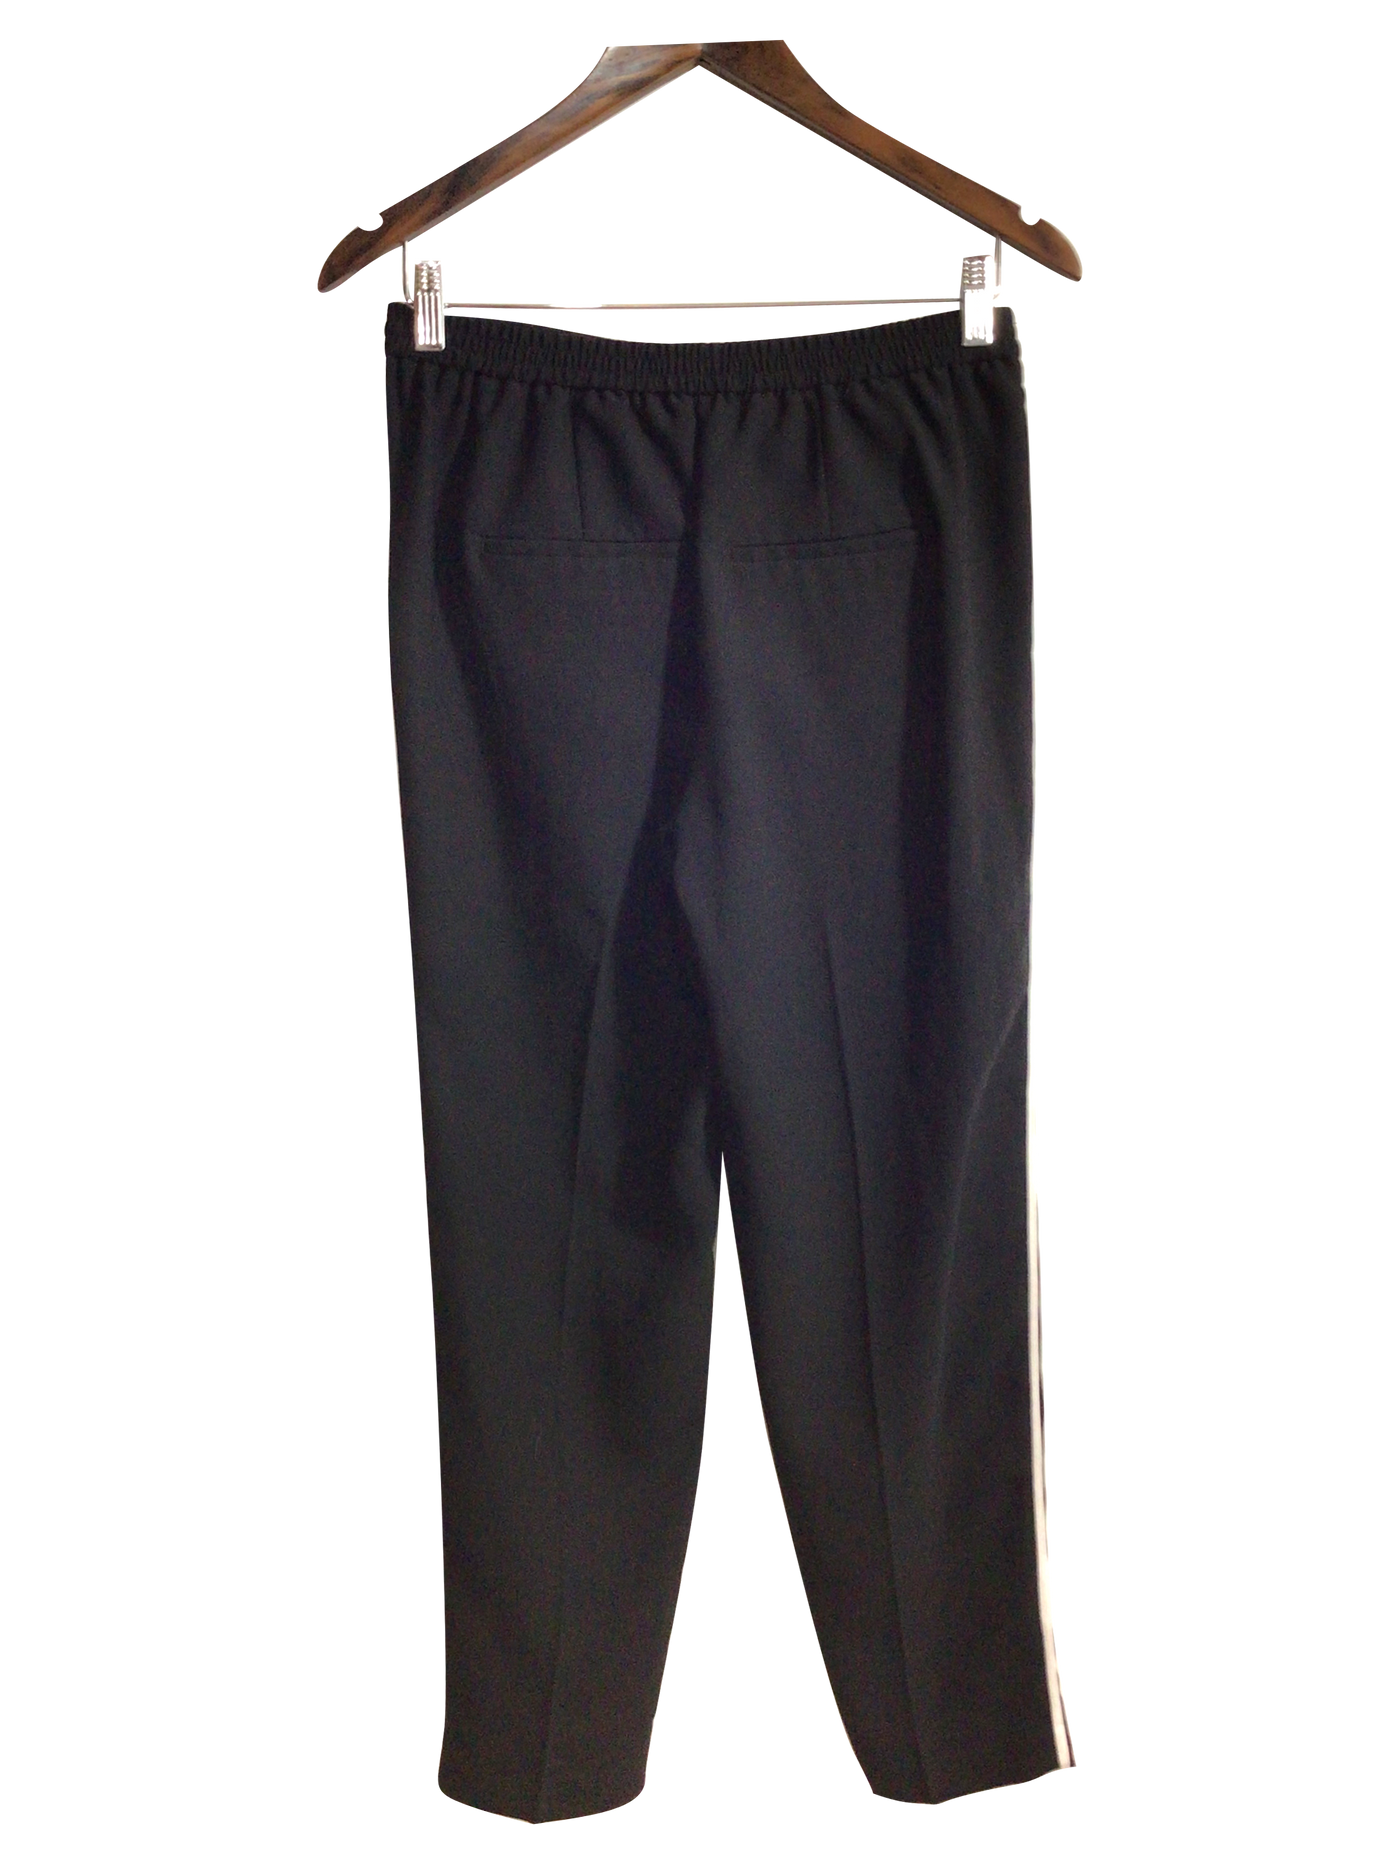 CAMBER & GRACE Women Work Pants Regular fit in Black - Size S | 15 $ KOOP